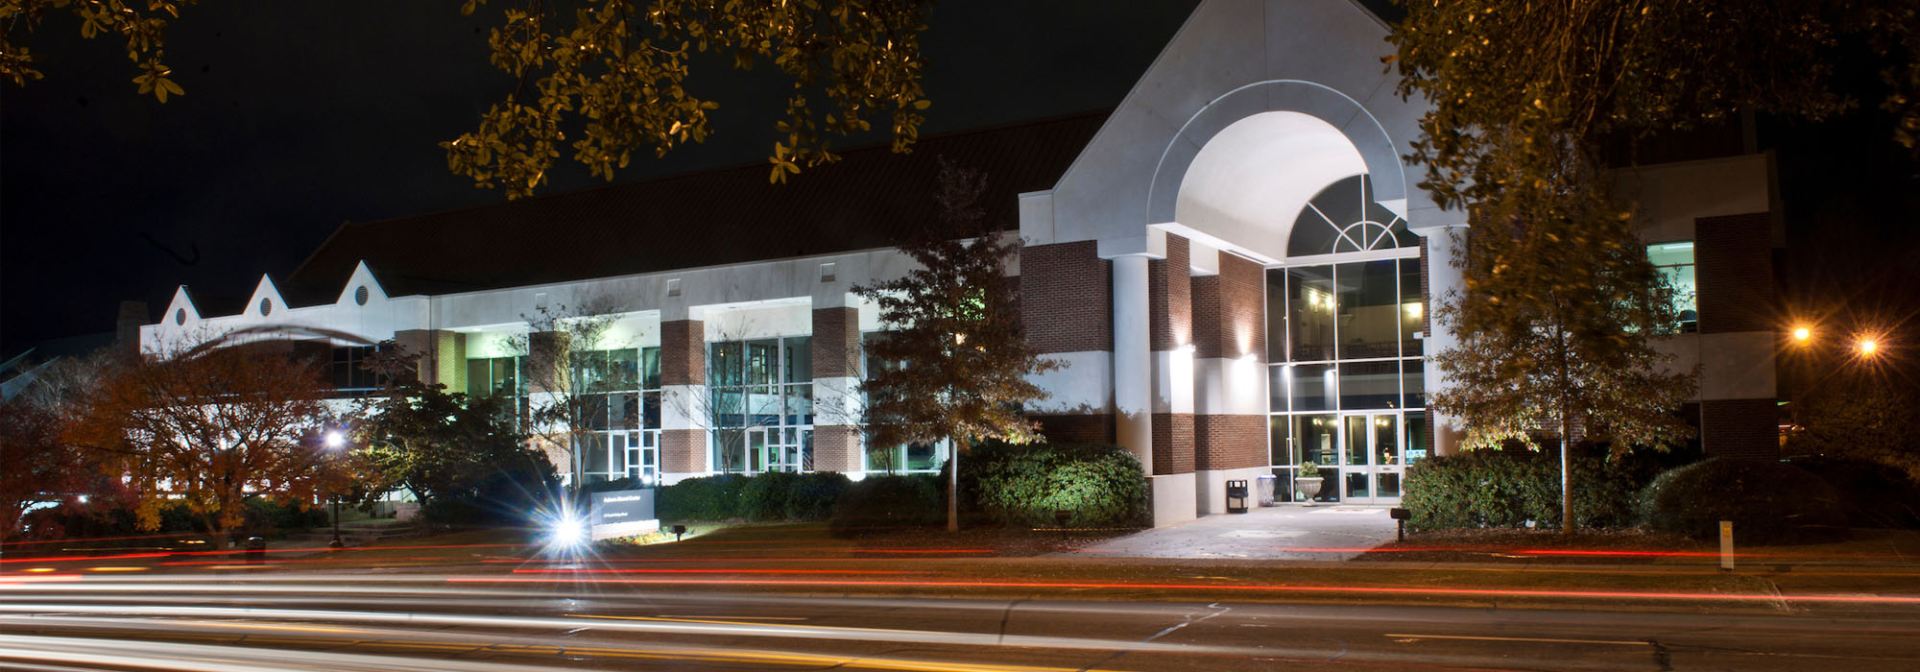 Auburn University Alumni Center